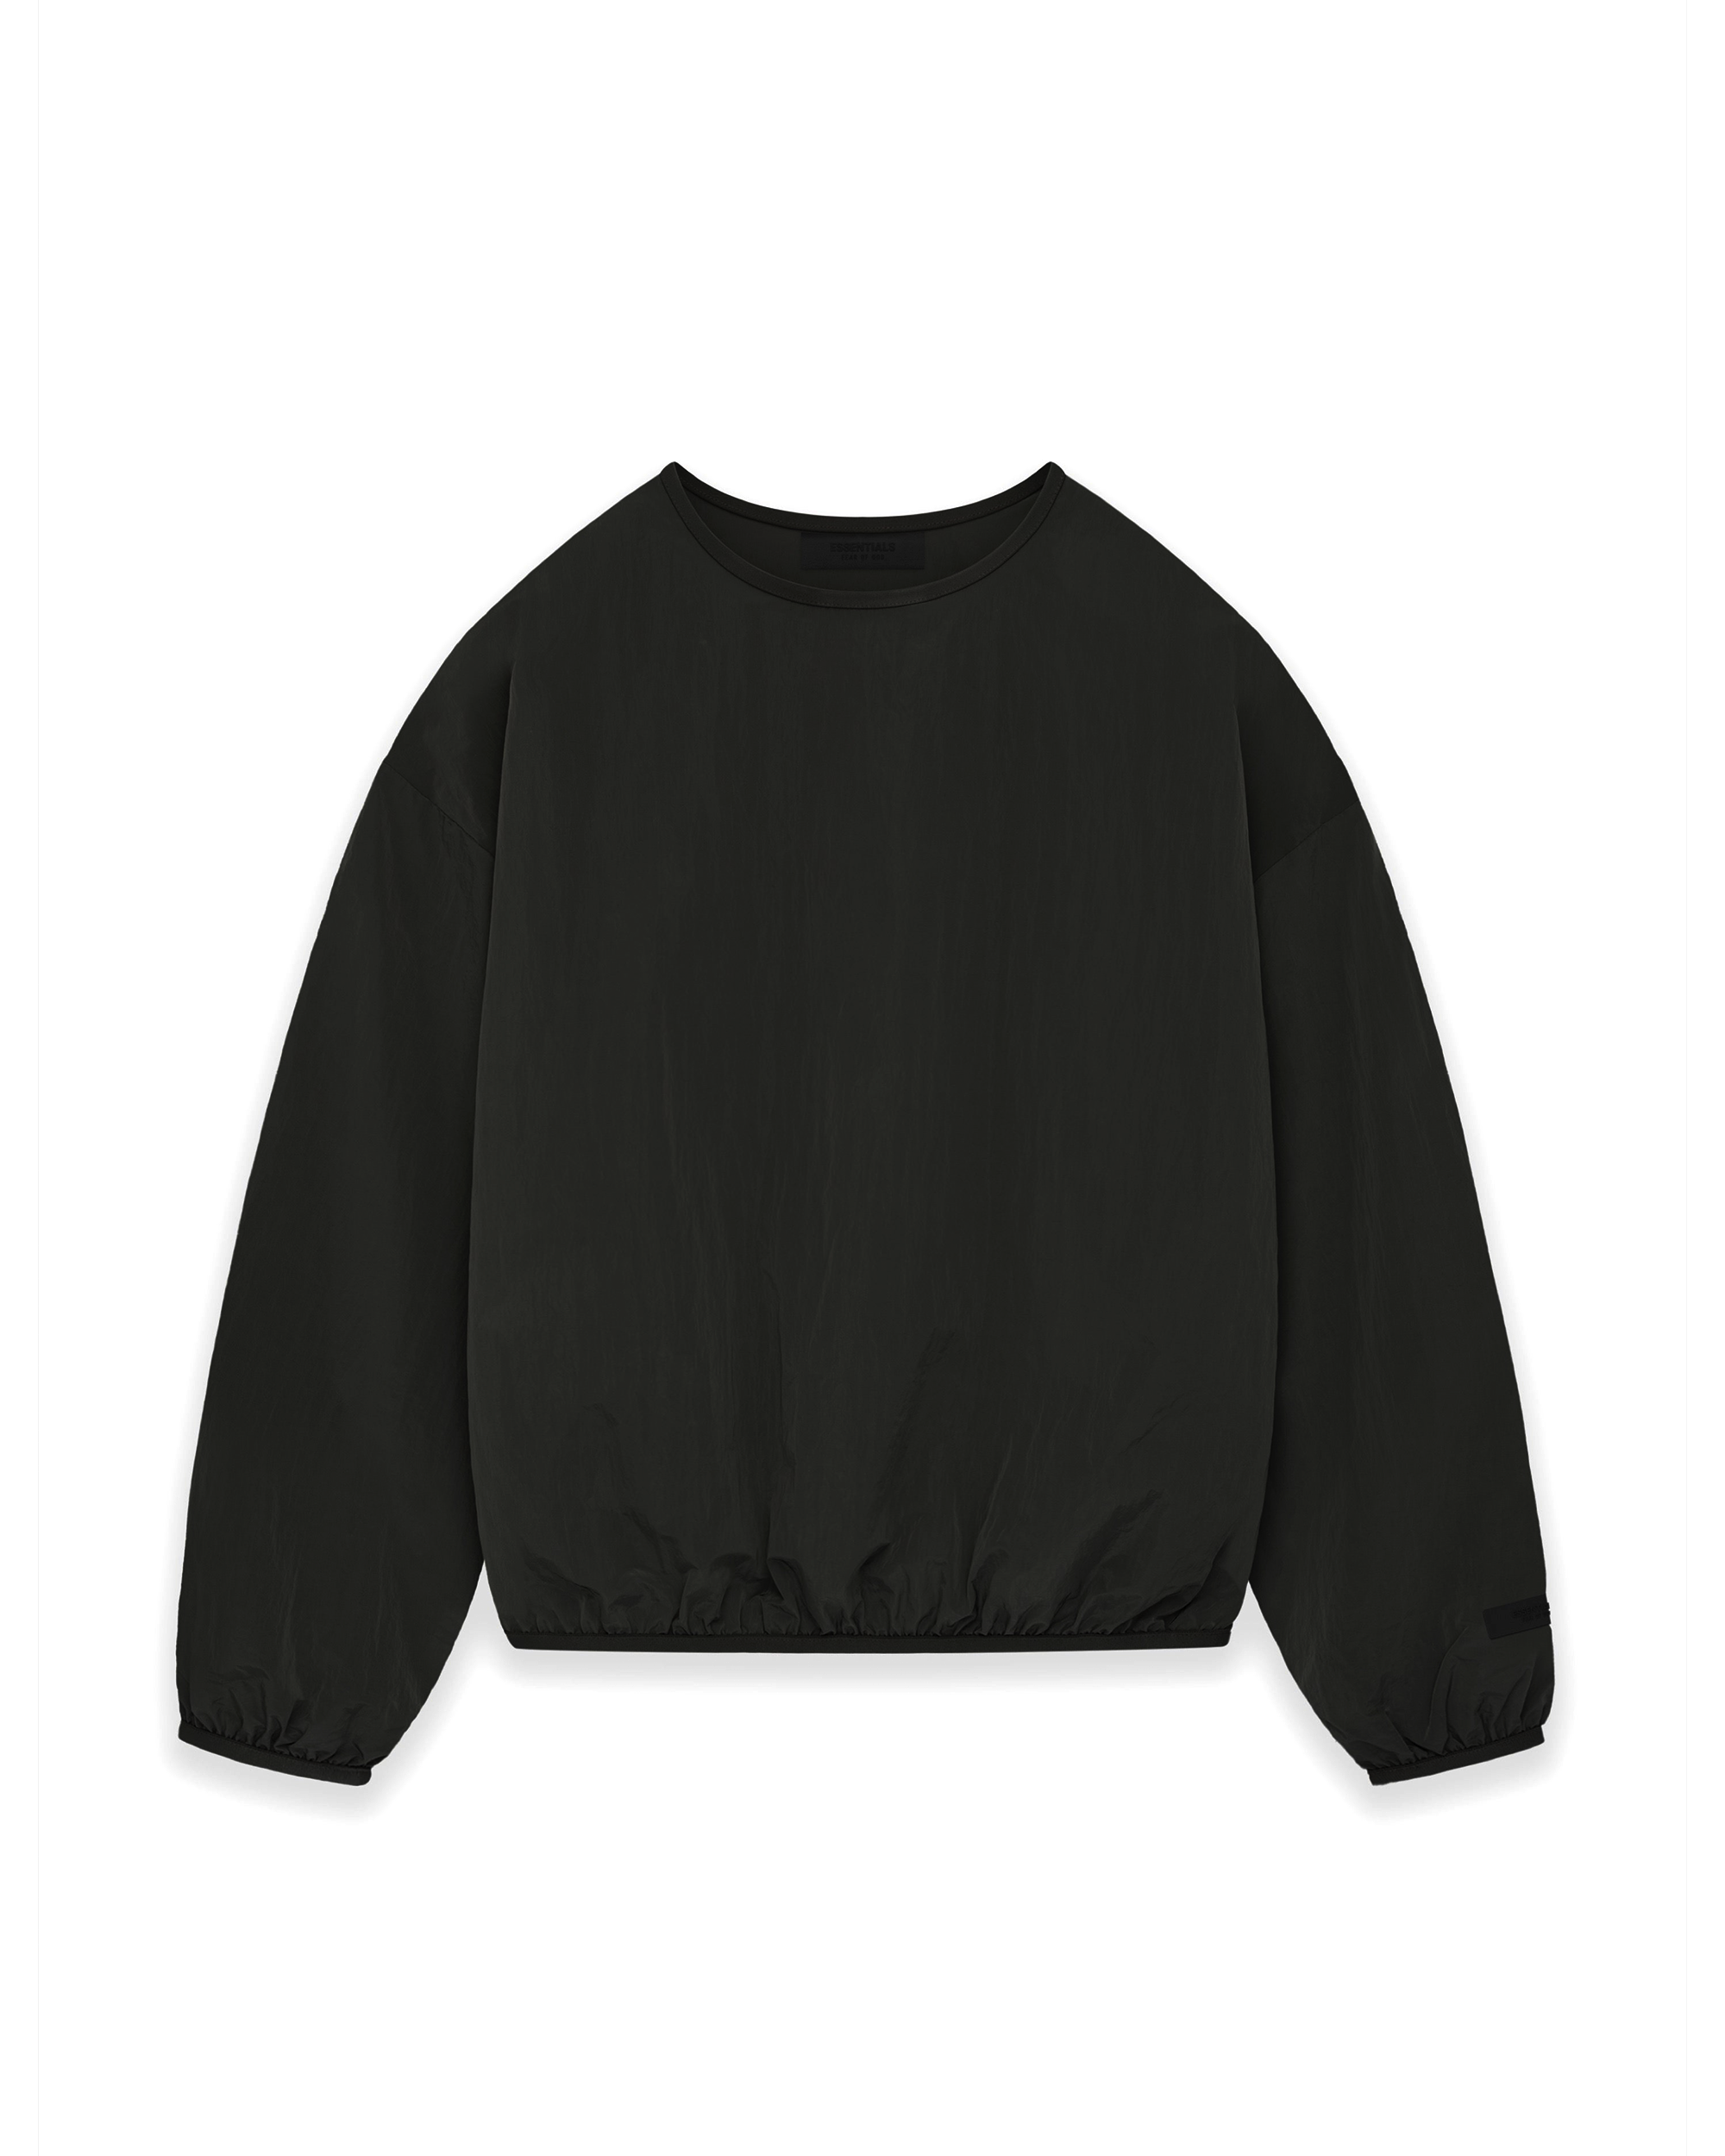 Crinkle Nylon Sweater - Jet Black